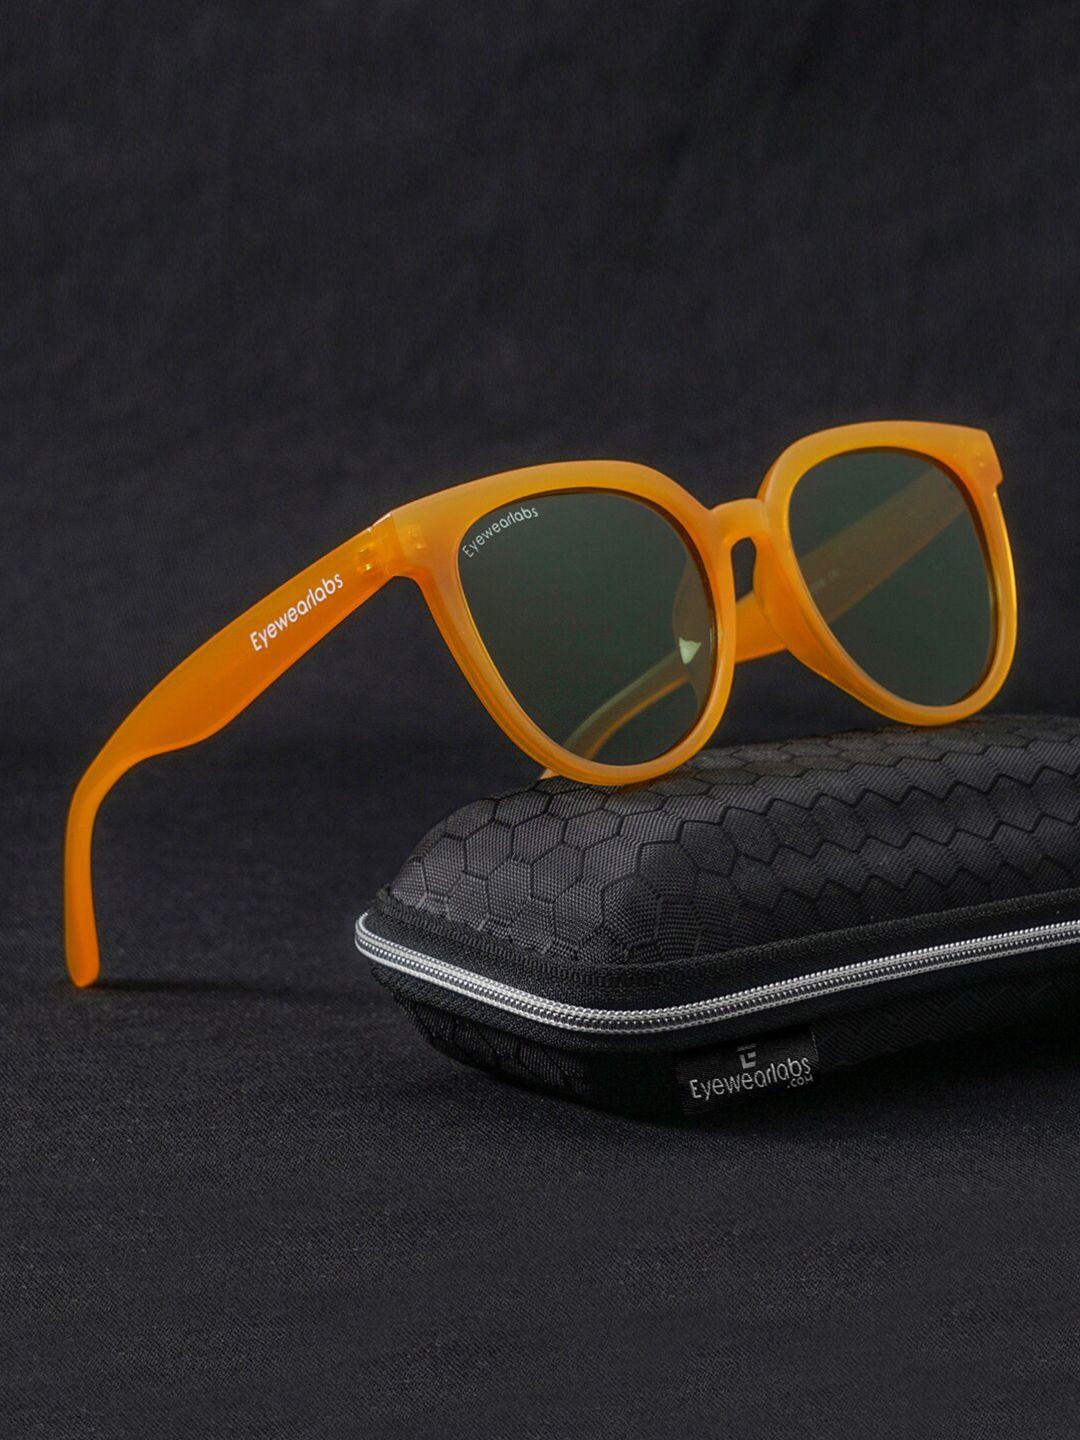 eyewearlabs women lens & oval sunglasses with uv protected lens csundowneryellowsc1el1152